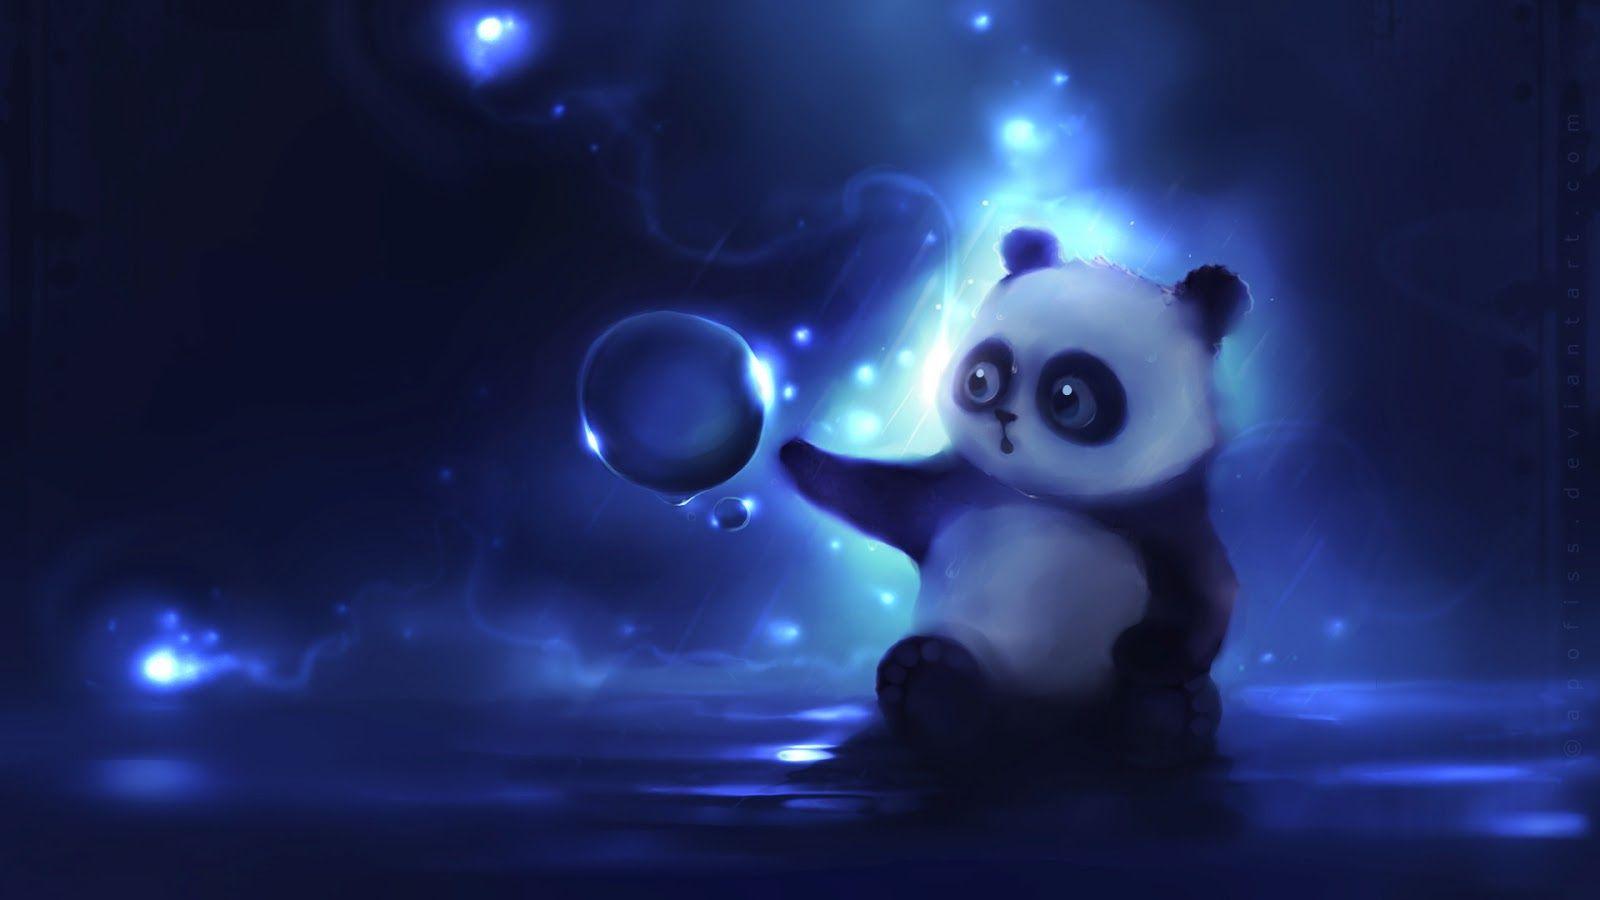 Cute animation wallpaper with panda bear ball curiosity